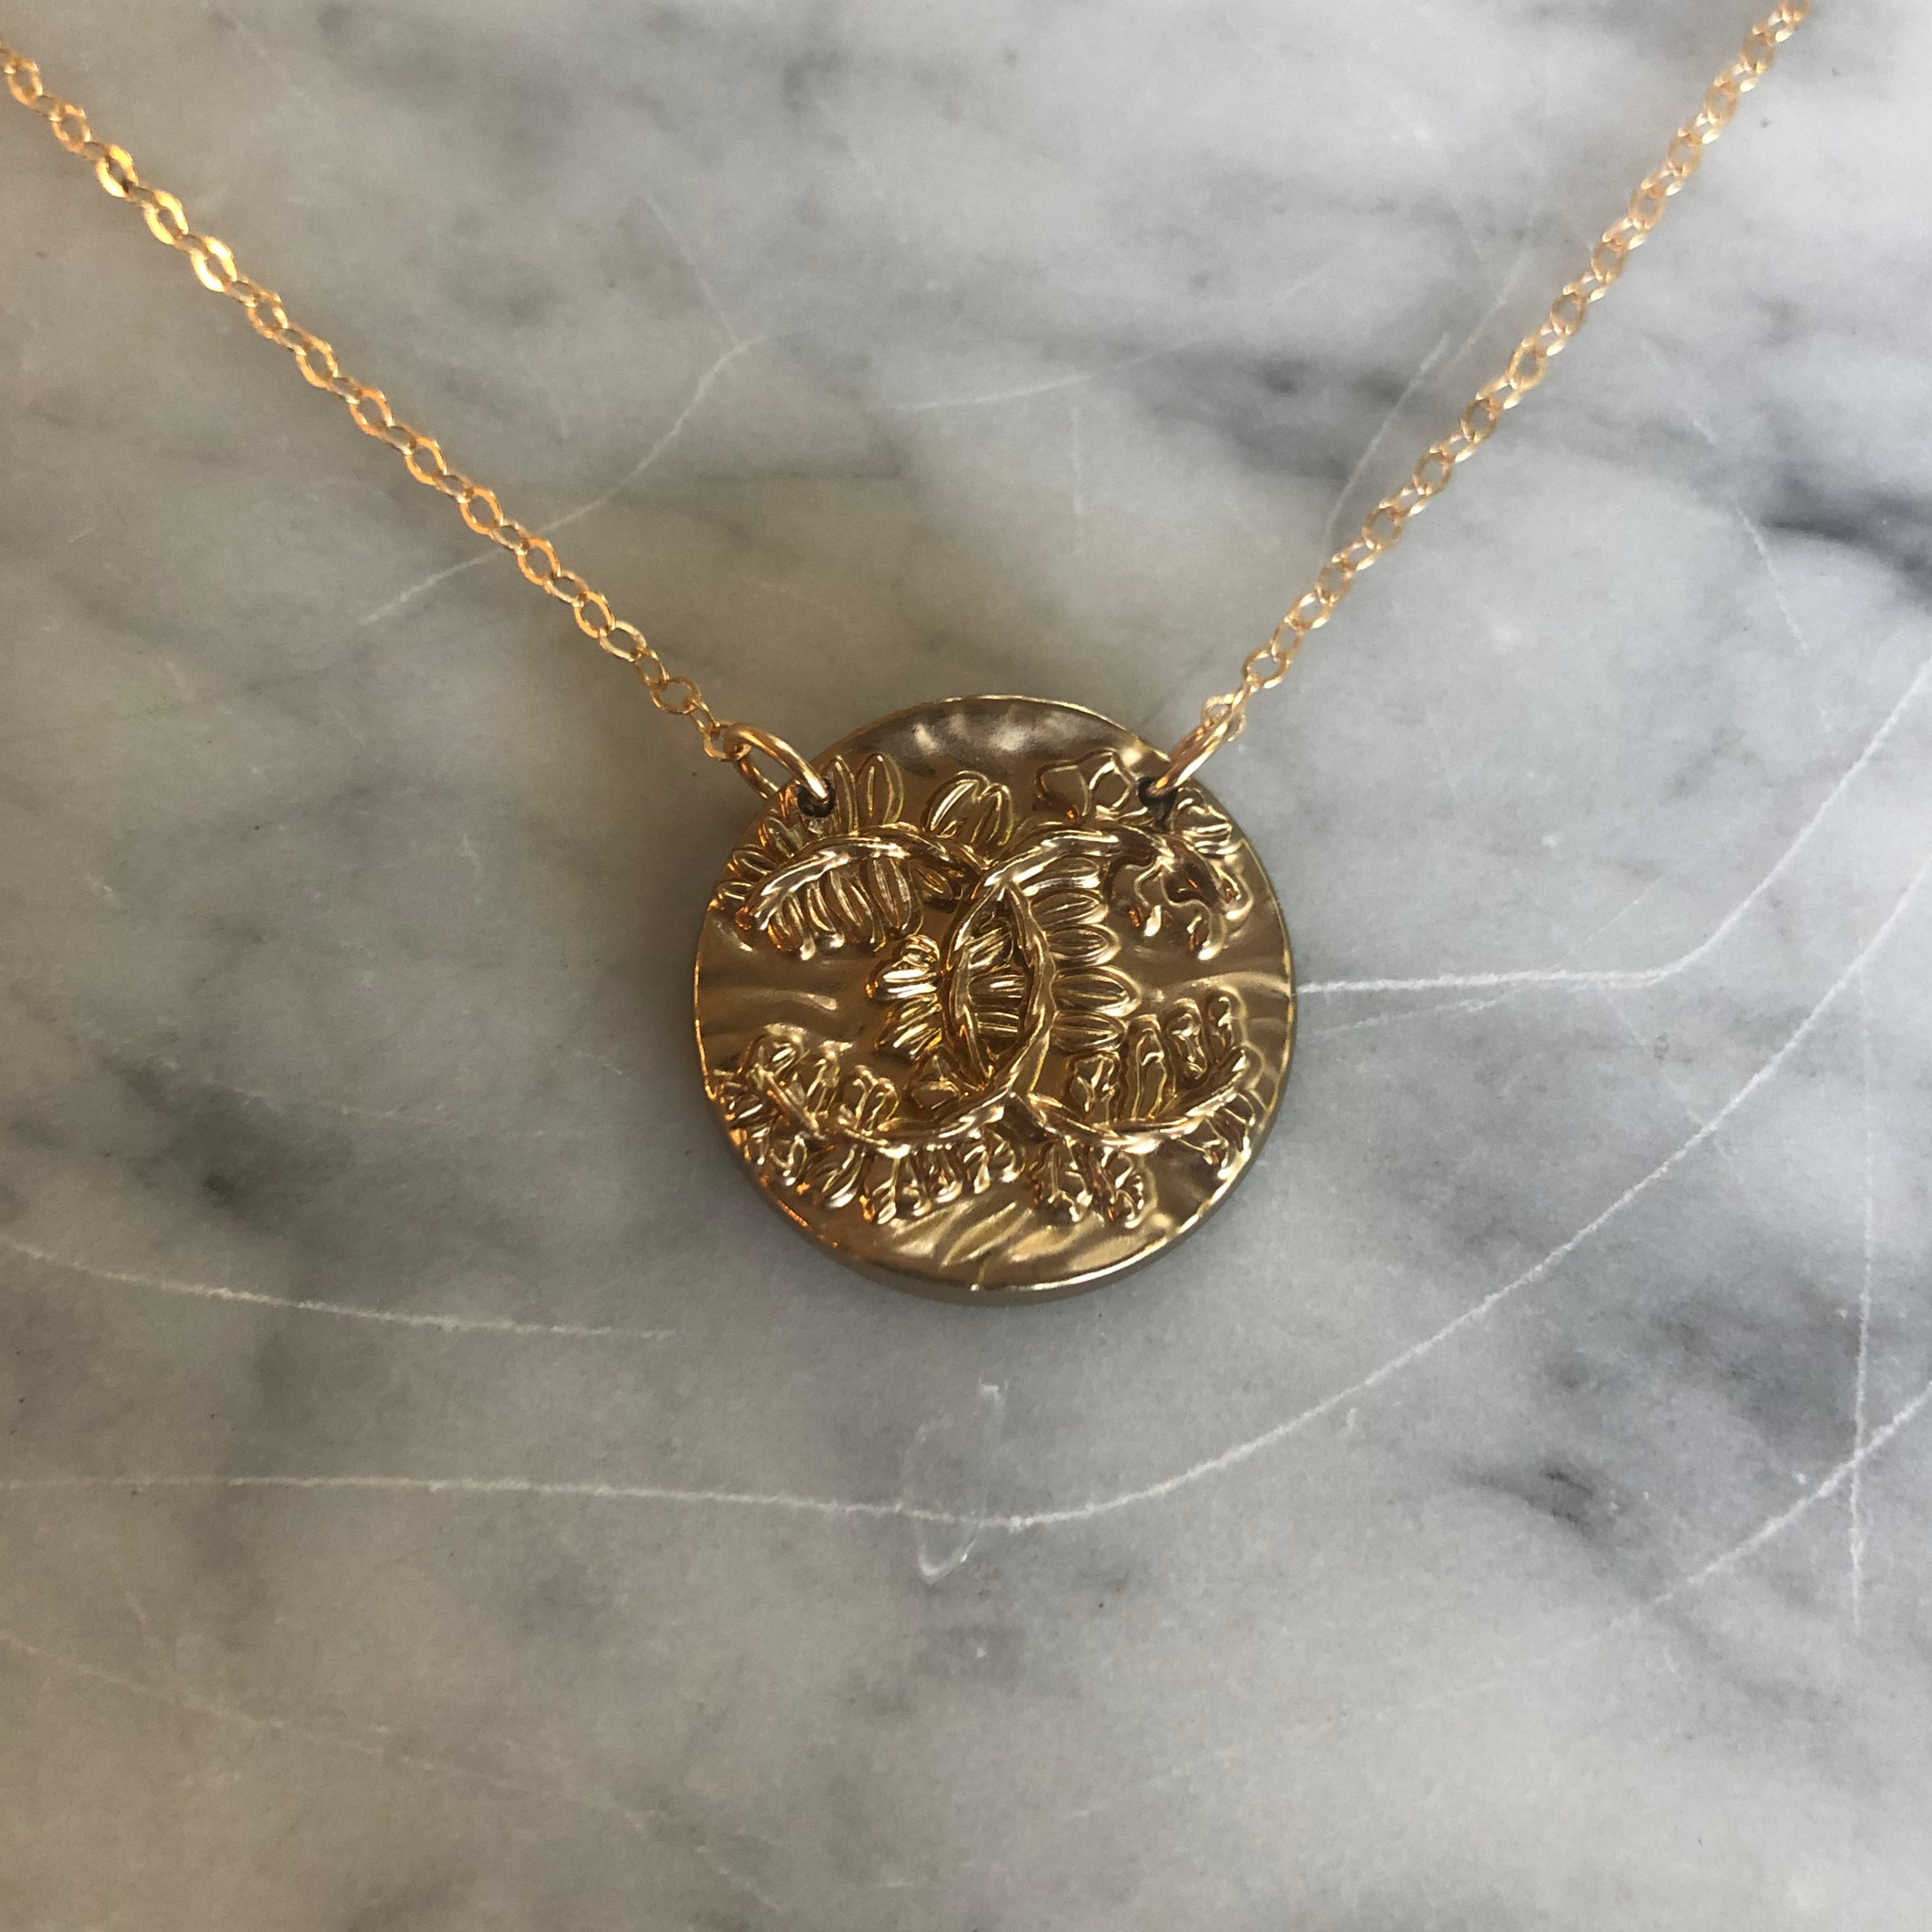 CHANEL | Jewelry | Chanel Rue Cambon Gold Coin Necklace | Poshmark